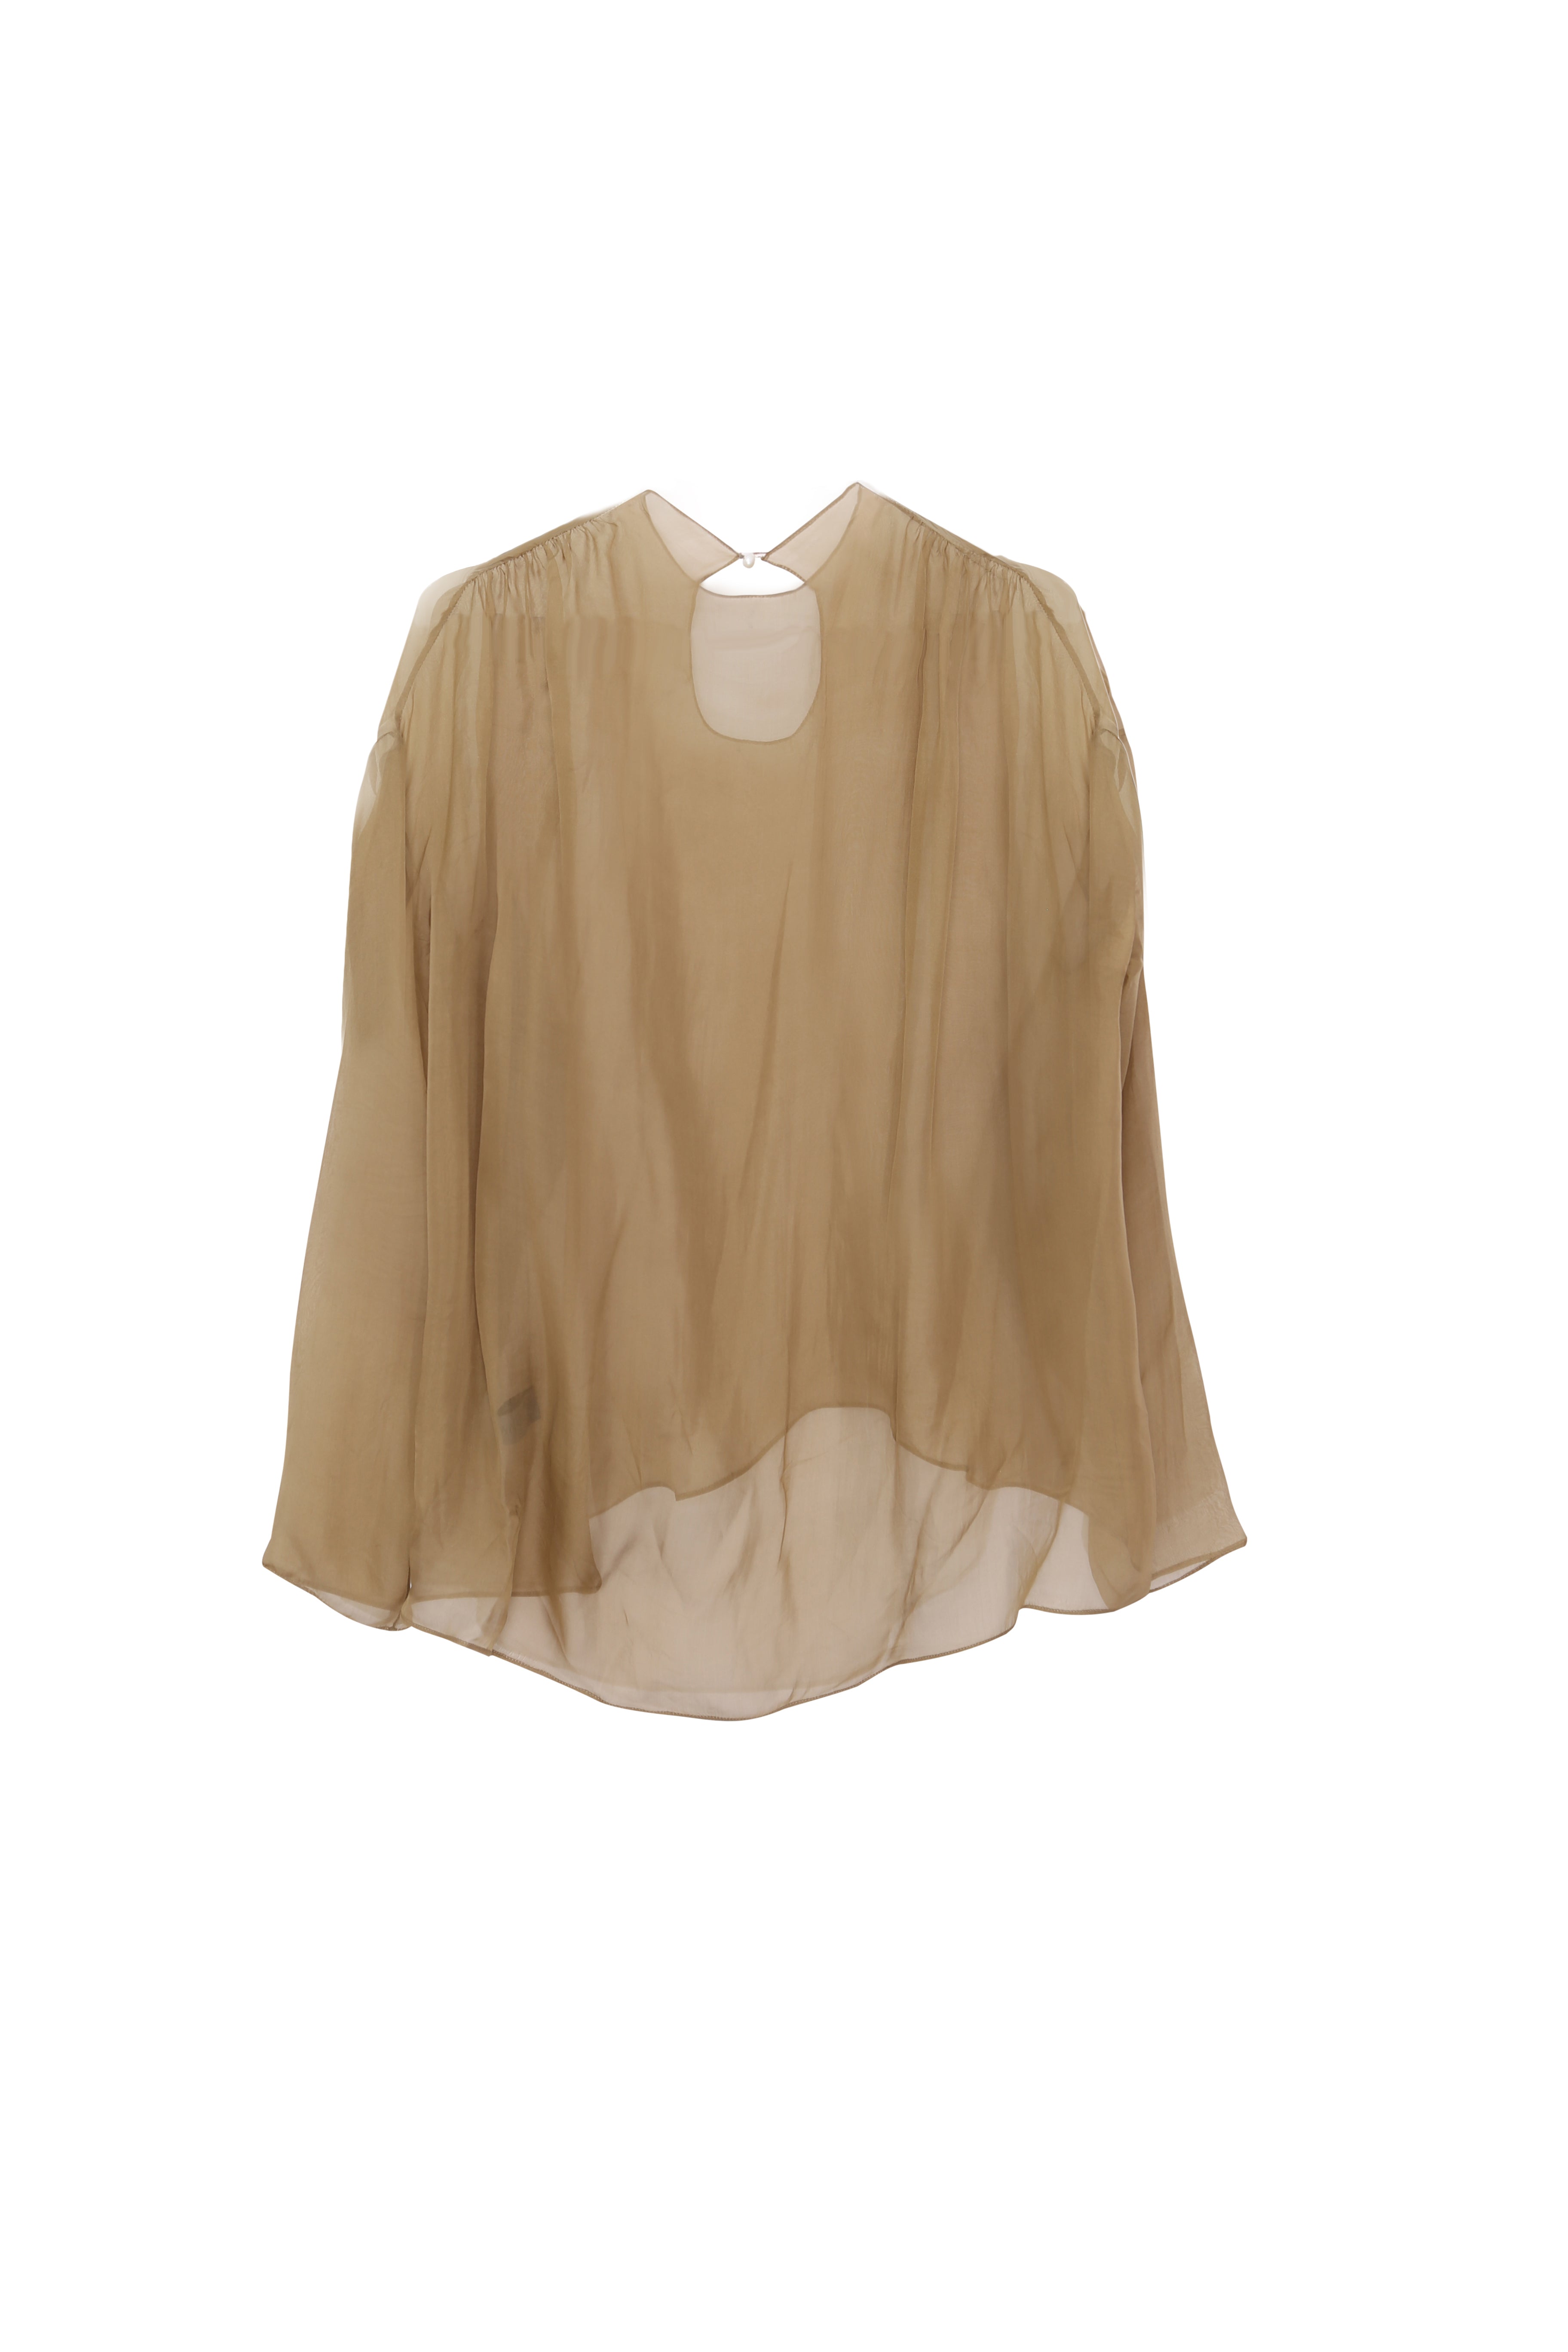 Silk blouse chiffon top